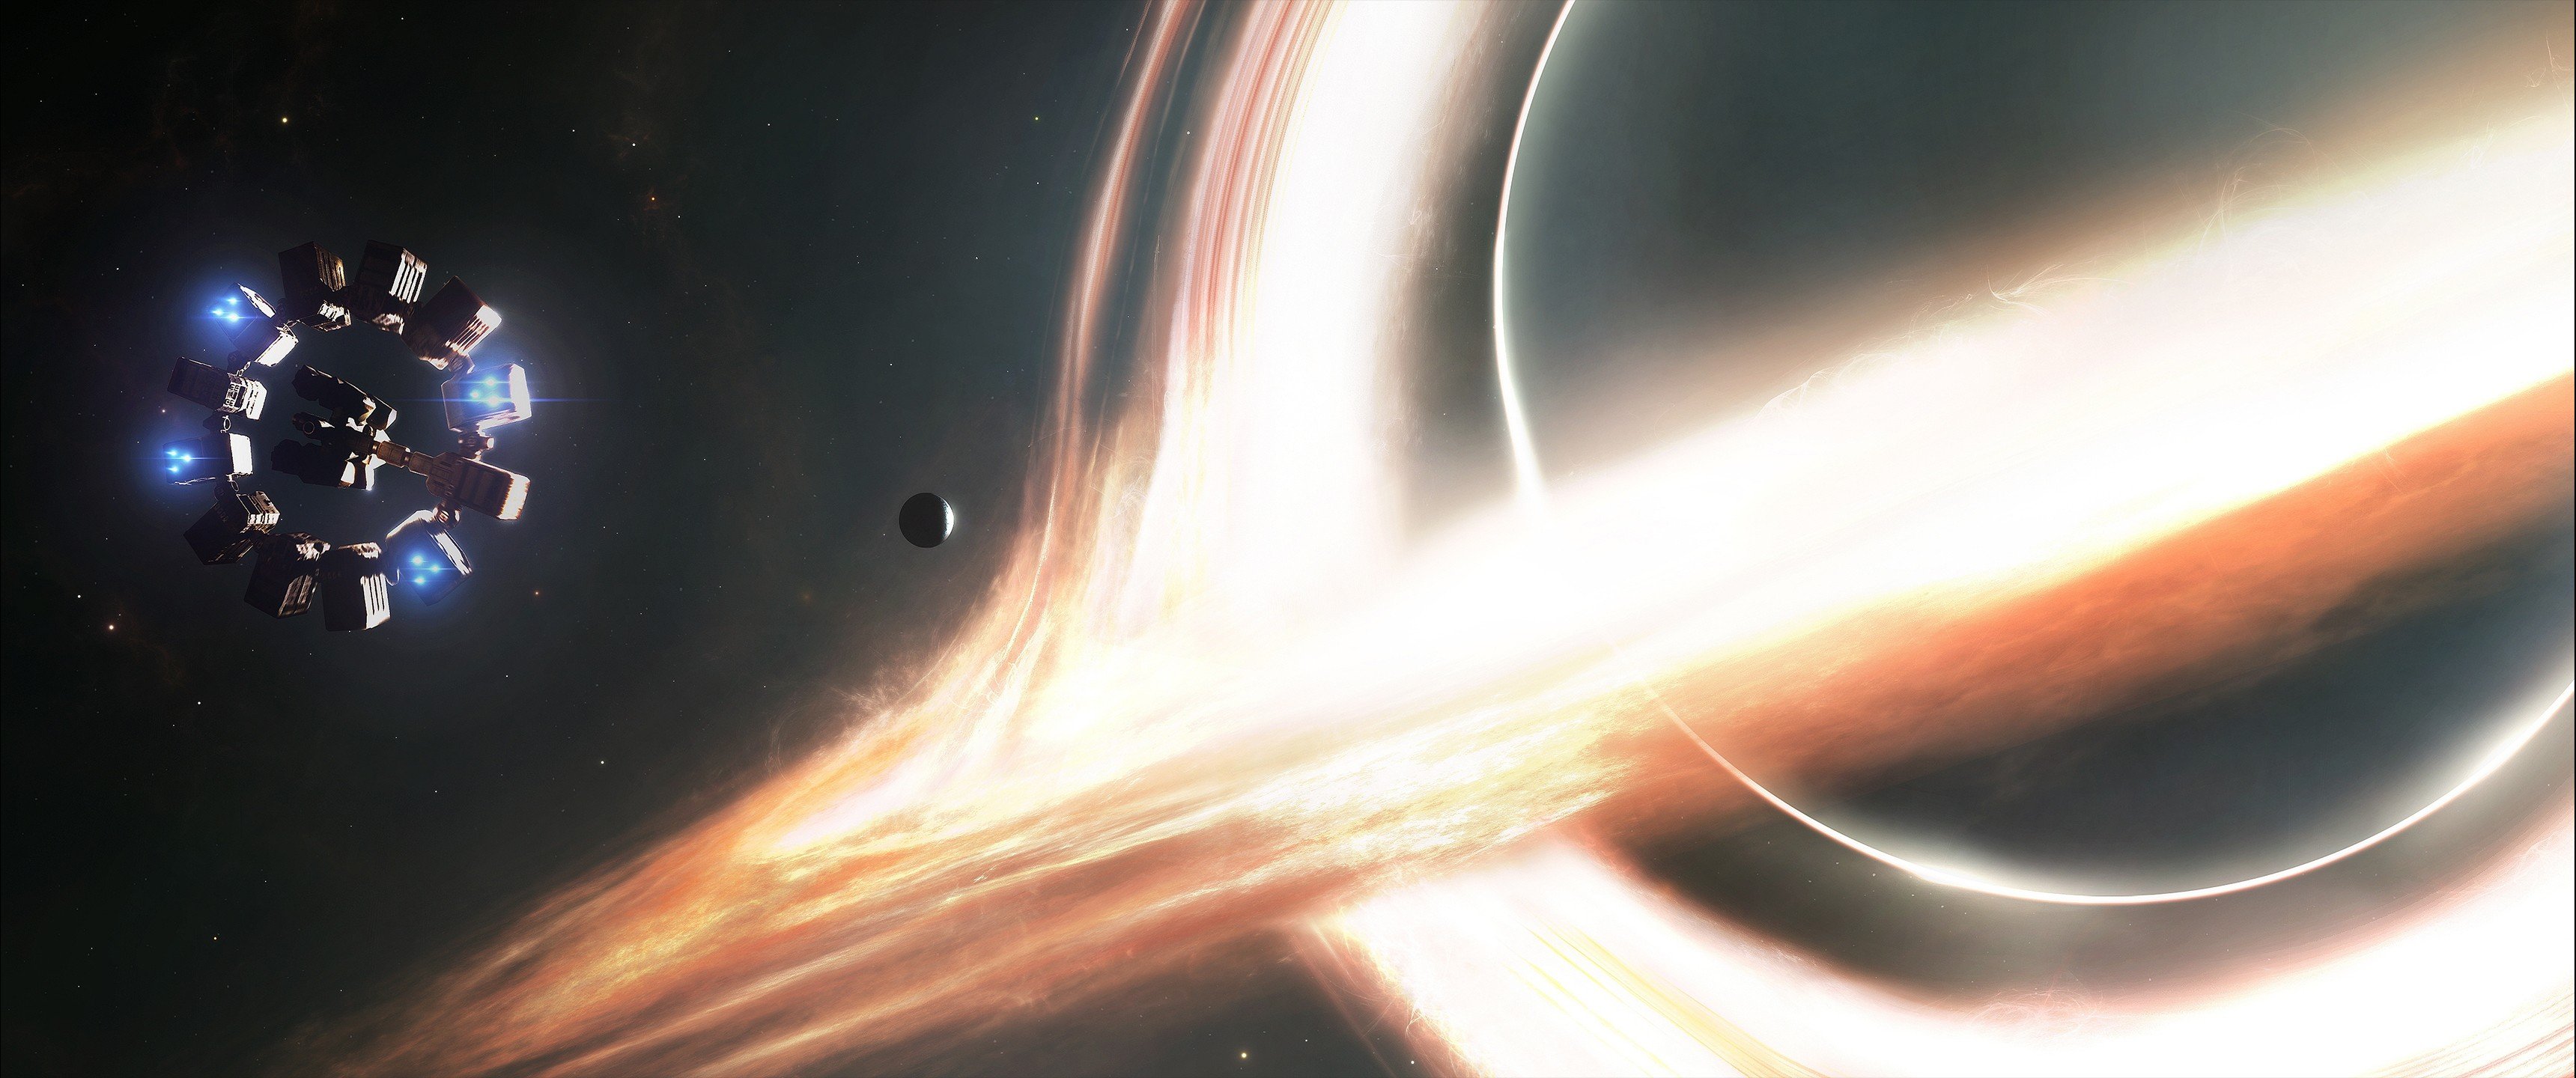 black holes, Interstellar (movie